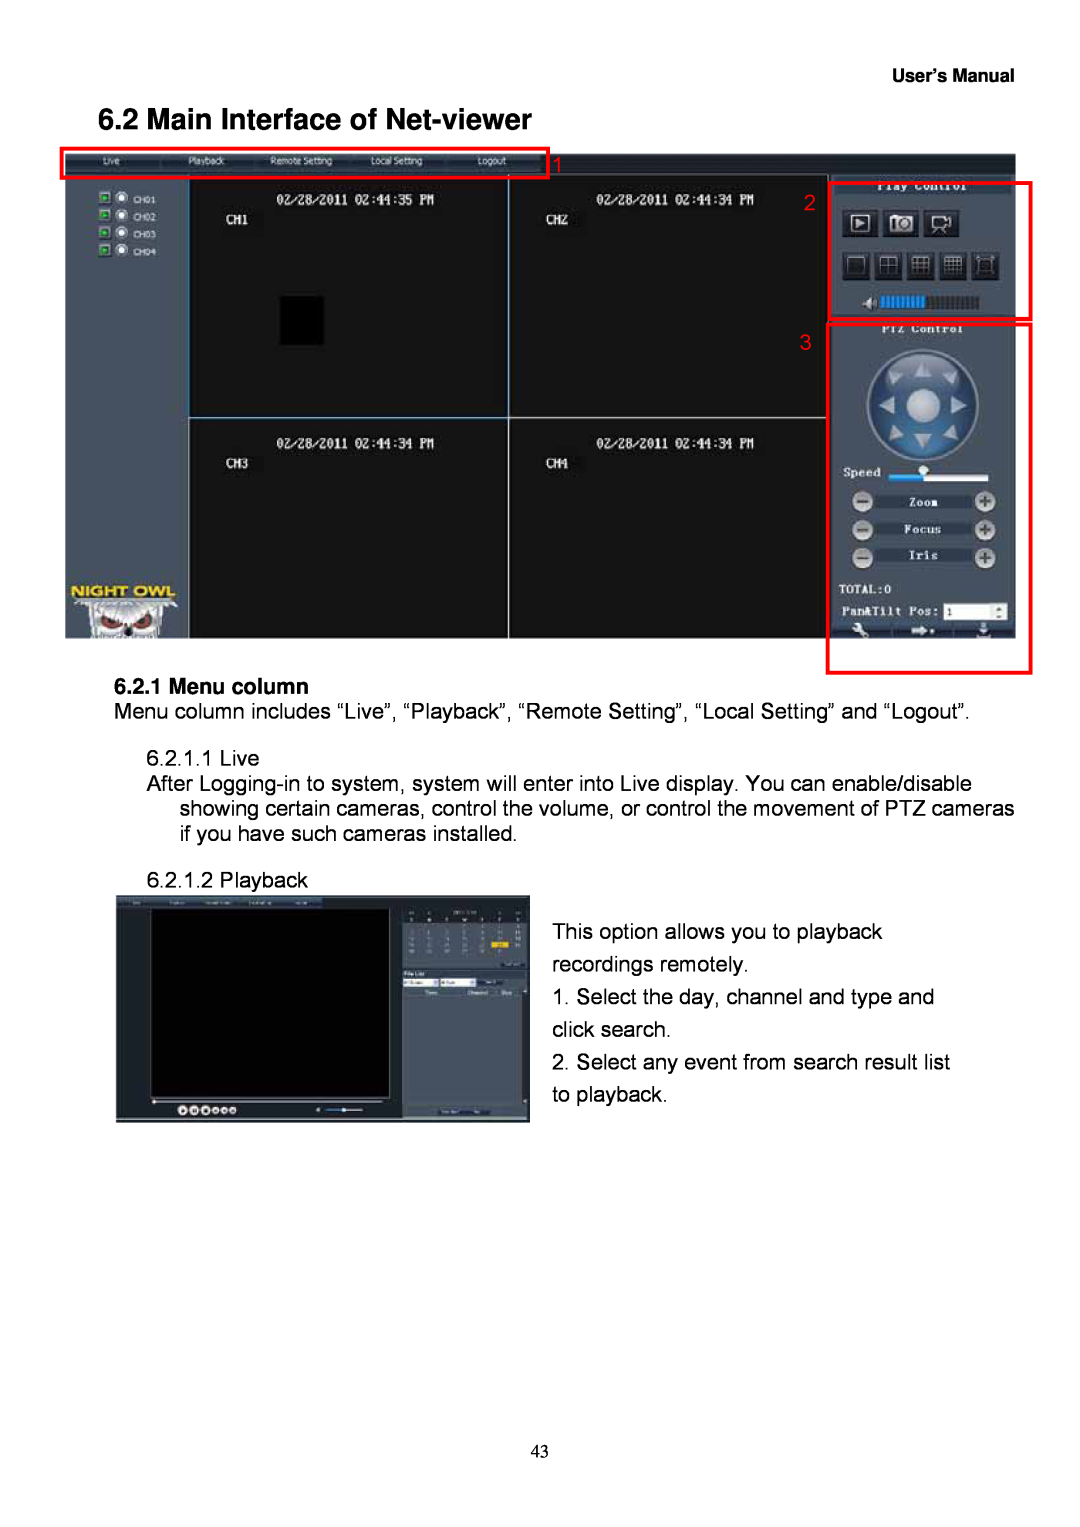 Night Owl Optics 4BL, Night Owl manual Menu column, Main Interface of Net-viewer 